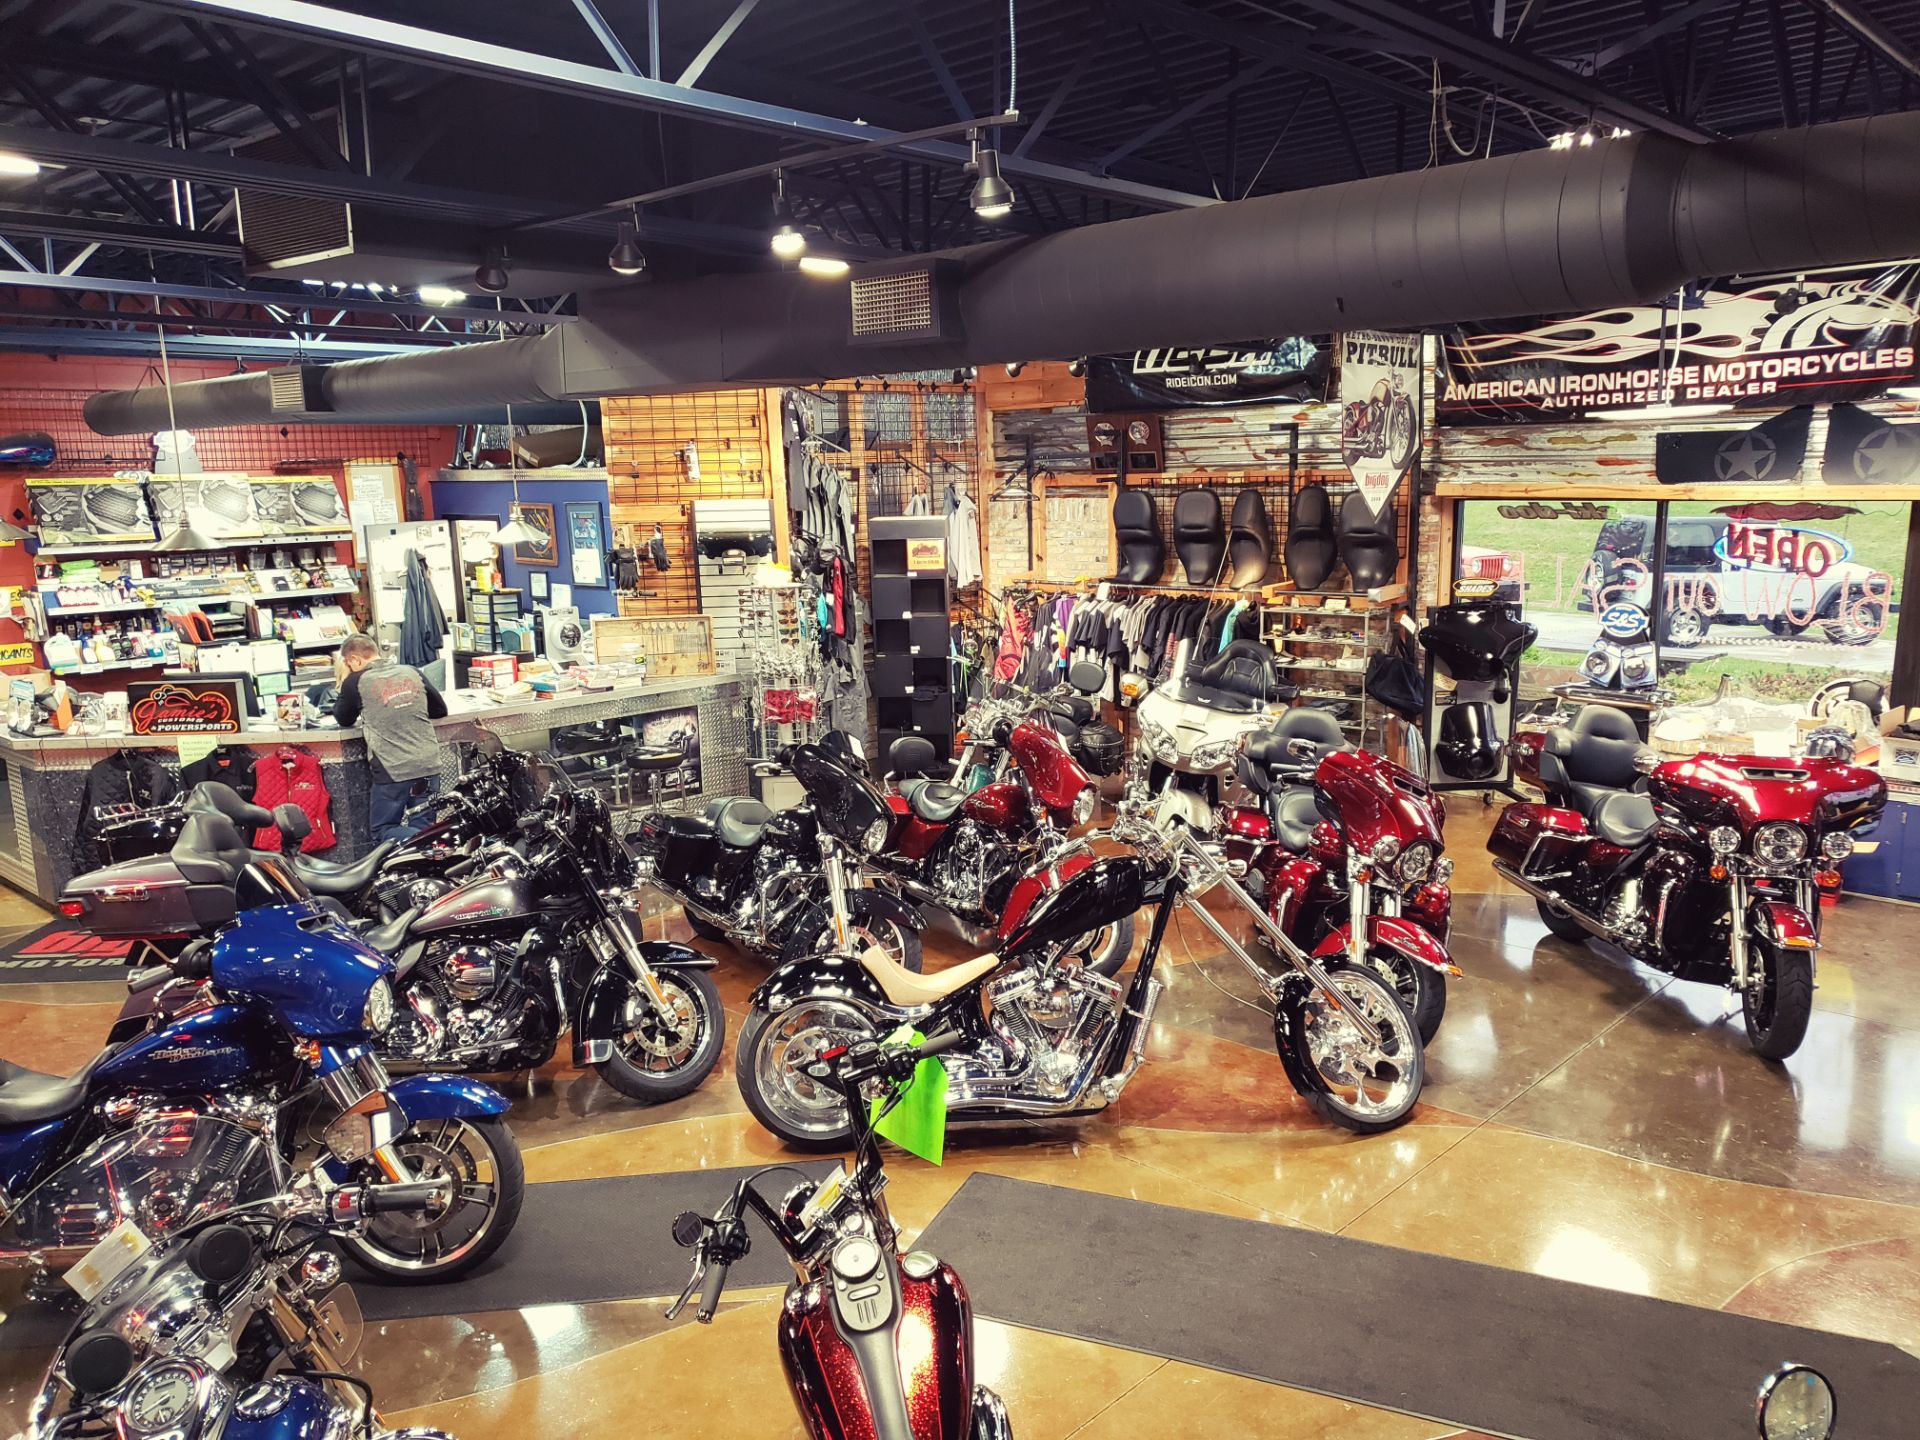 2019 Harley-Davidson Street Glide® Special in Big Bend, Wisconsin - Photo 28